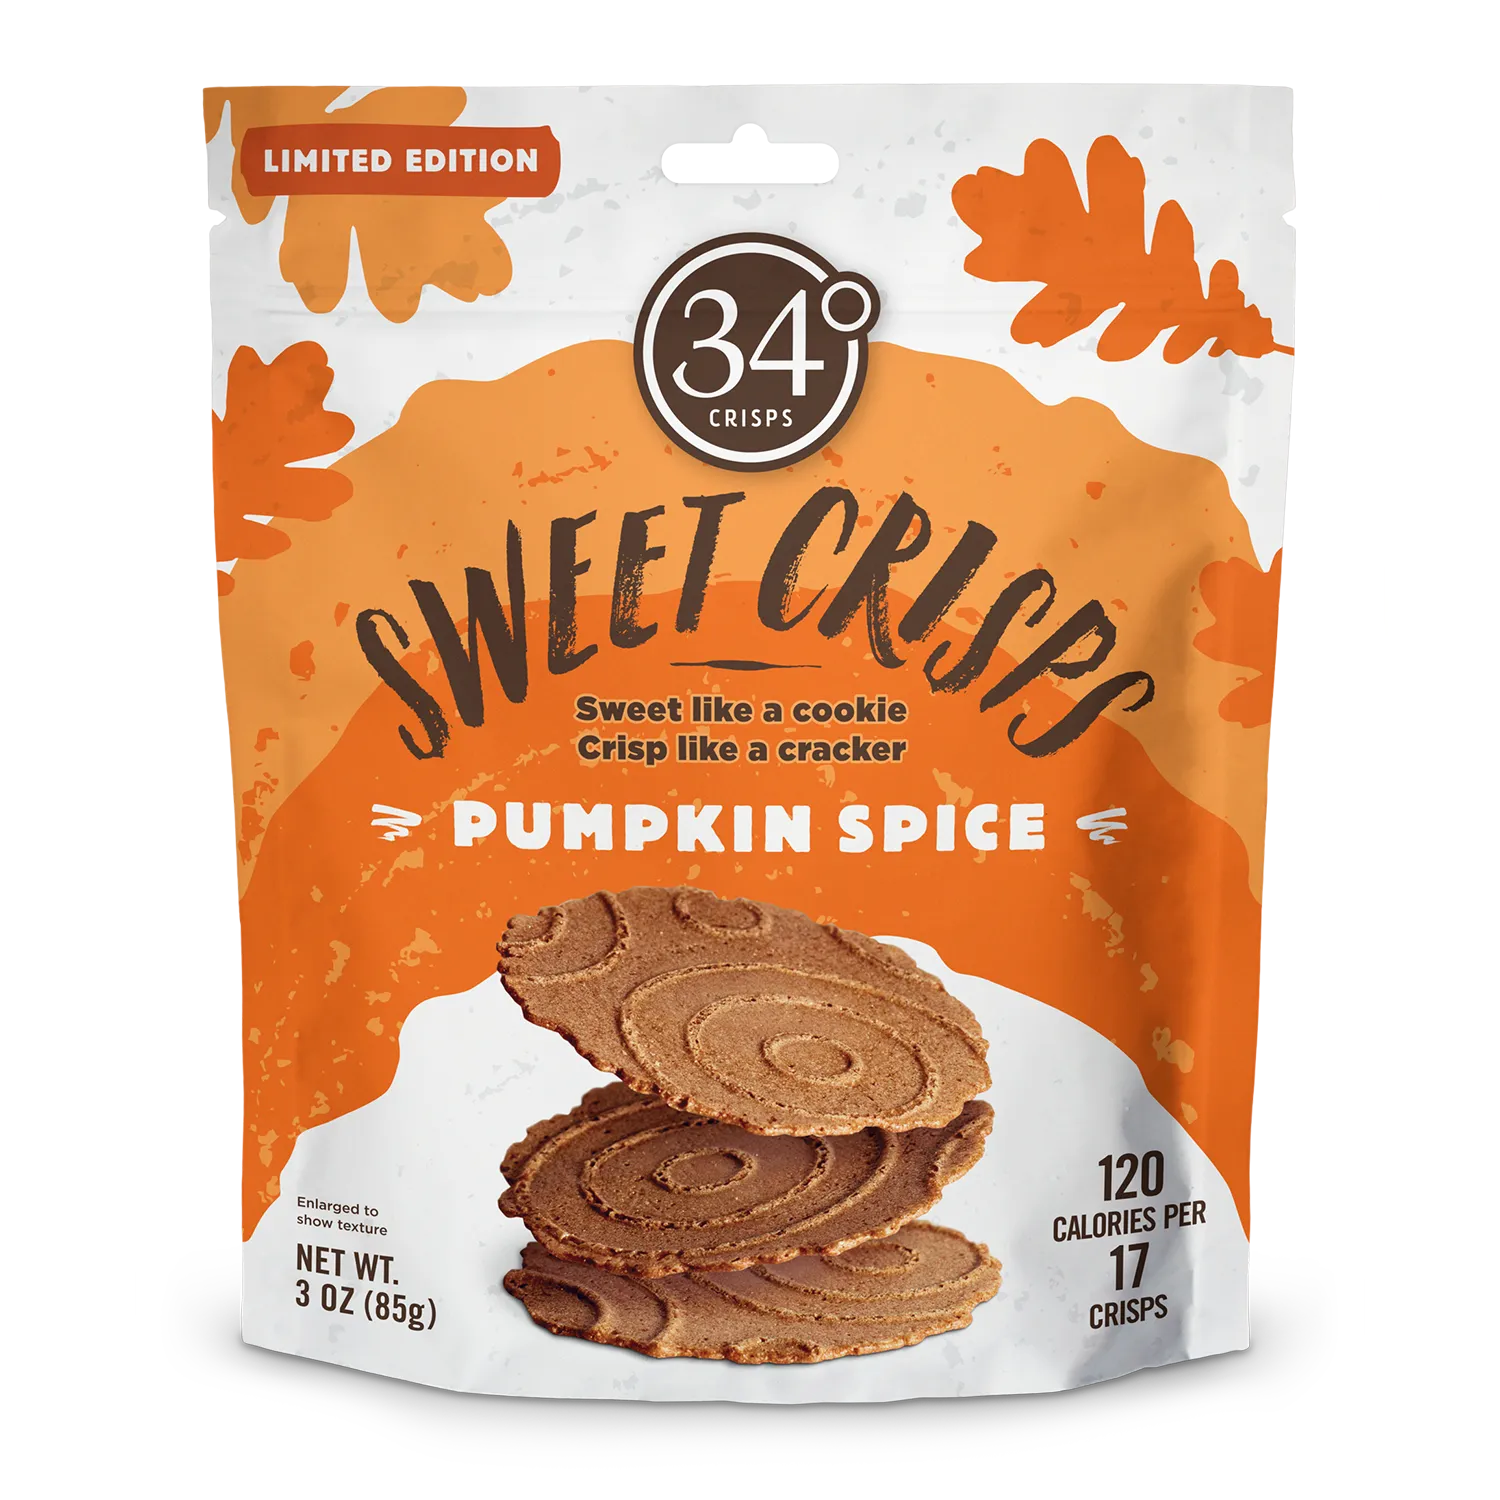 34 Degrees Pumpkin Spice Sweet Crisps packaging front panel